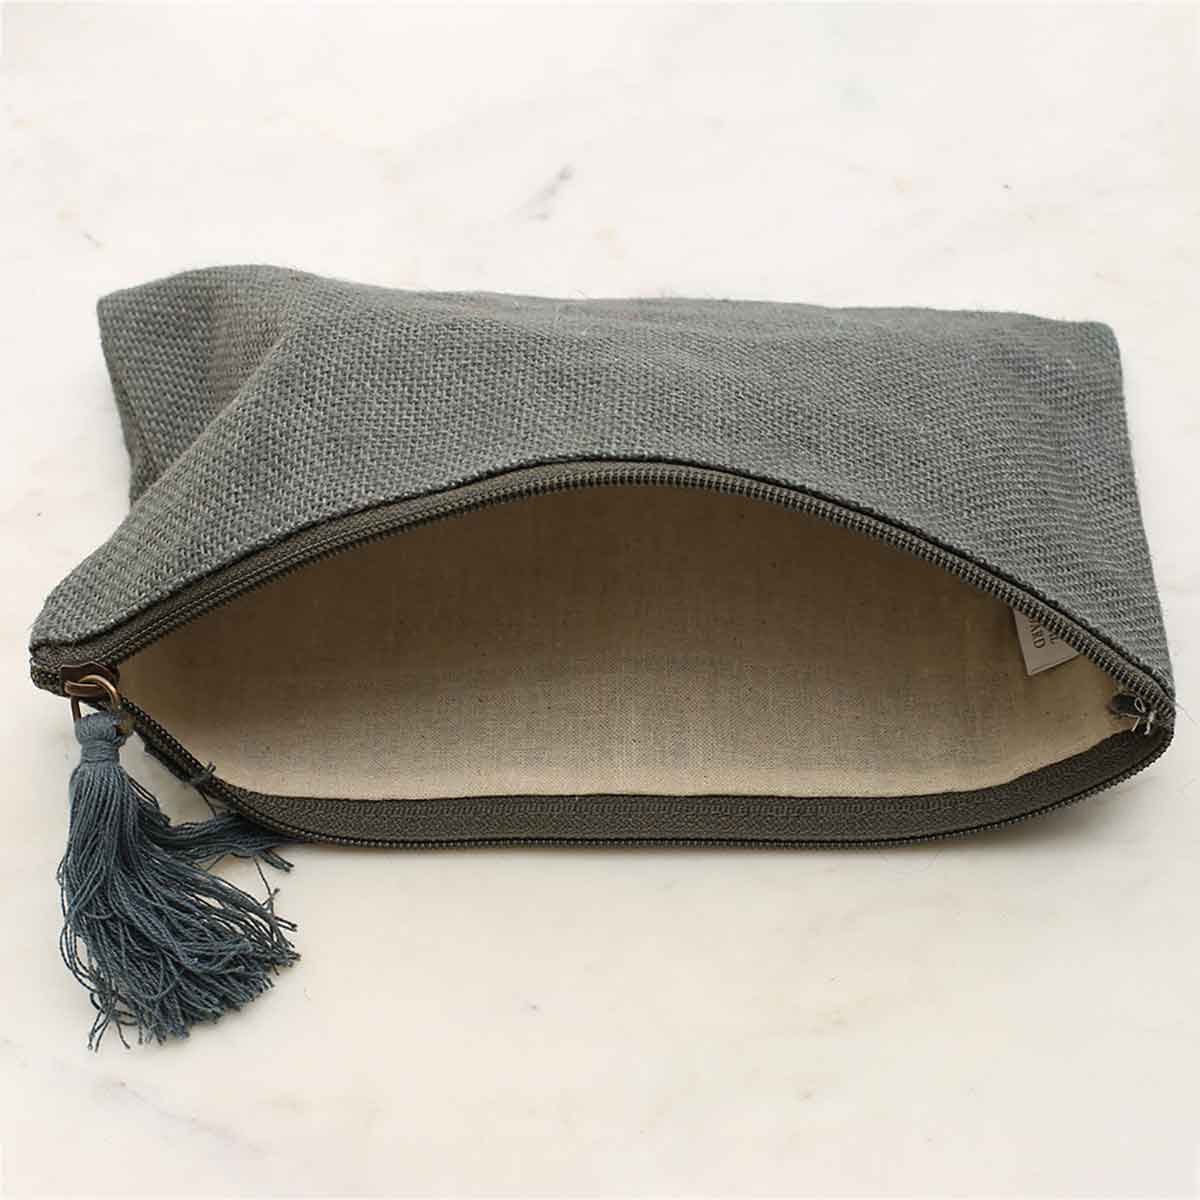 Jute Cosmetic Bag   Gray   10x6: Gray